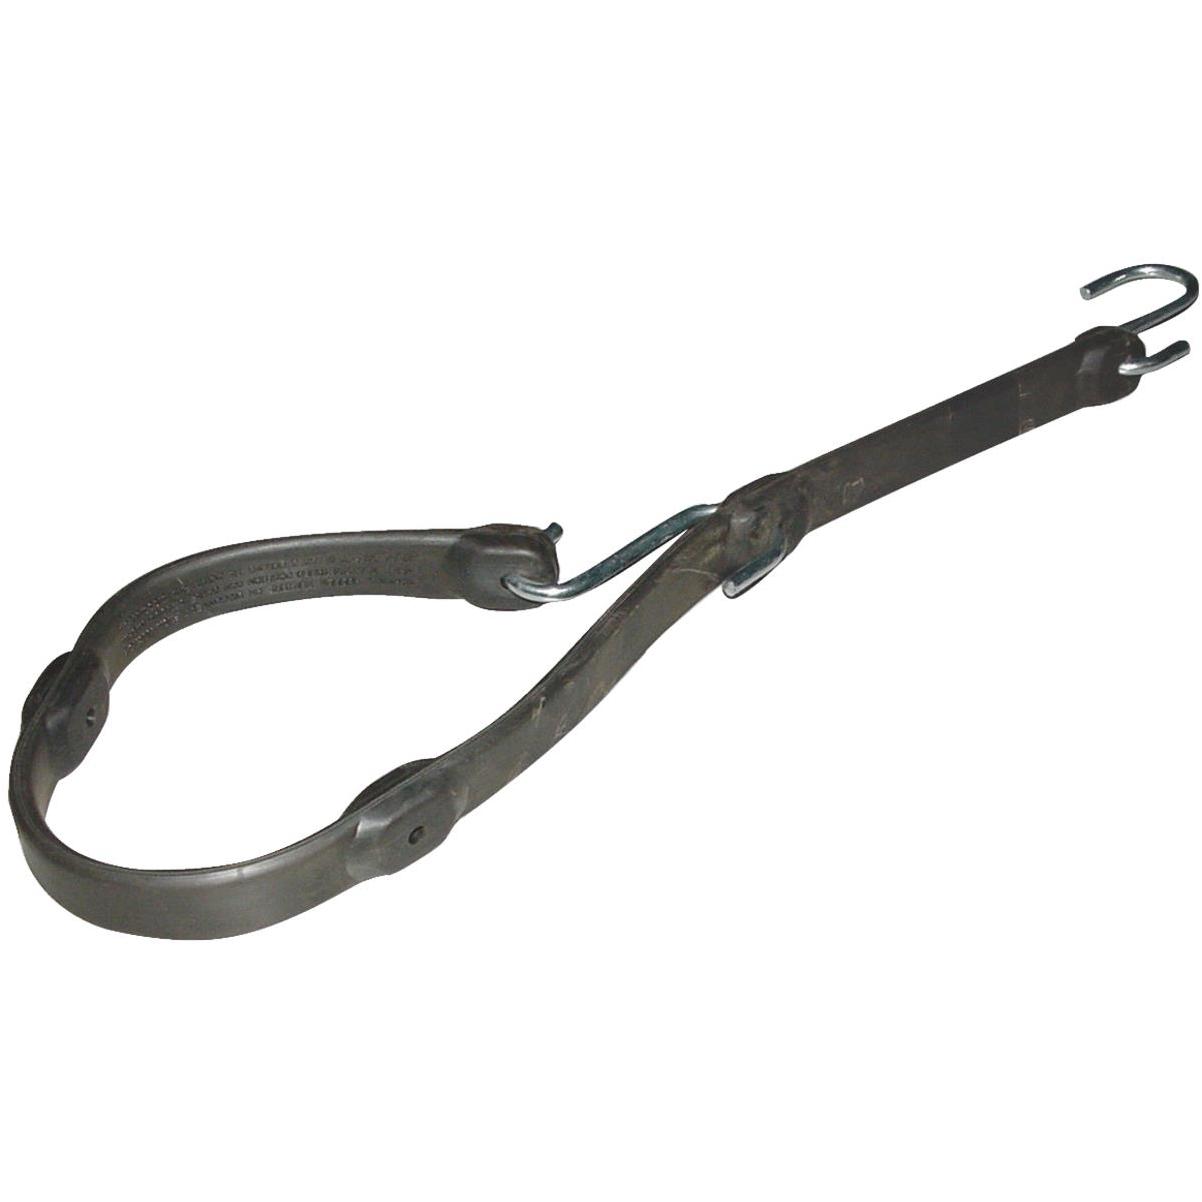 Buy Erickson Industrial Bungee Cord with Carabiner Hooks Black